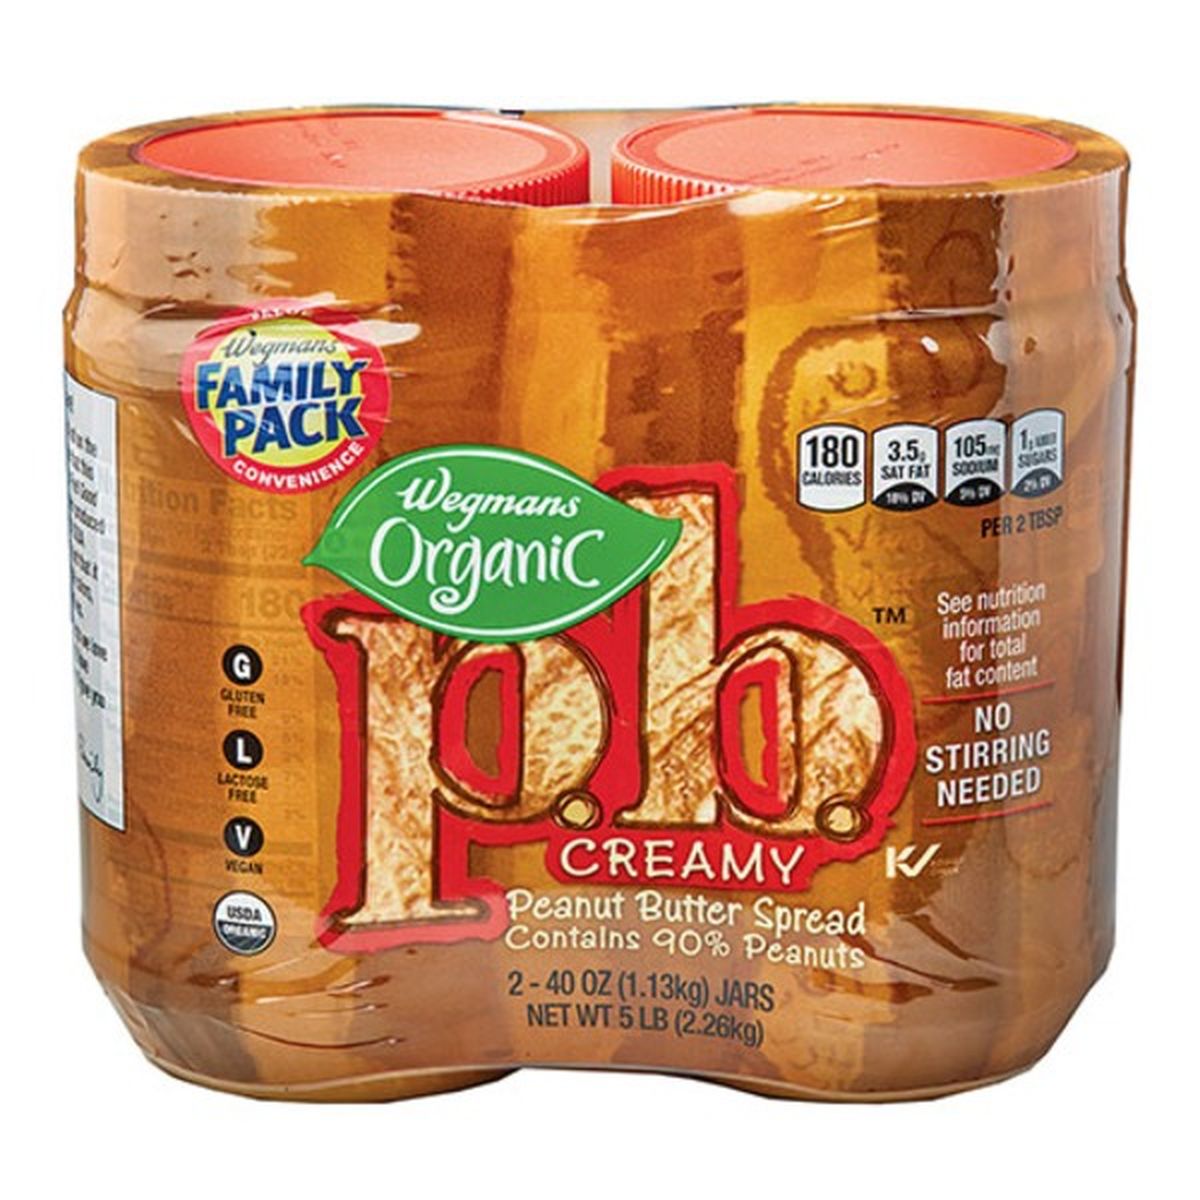 Calories in Wegmans Organic Creamy p.b. Peanut Butter Spread, 2 UNITS, FAMILY PACK